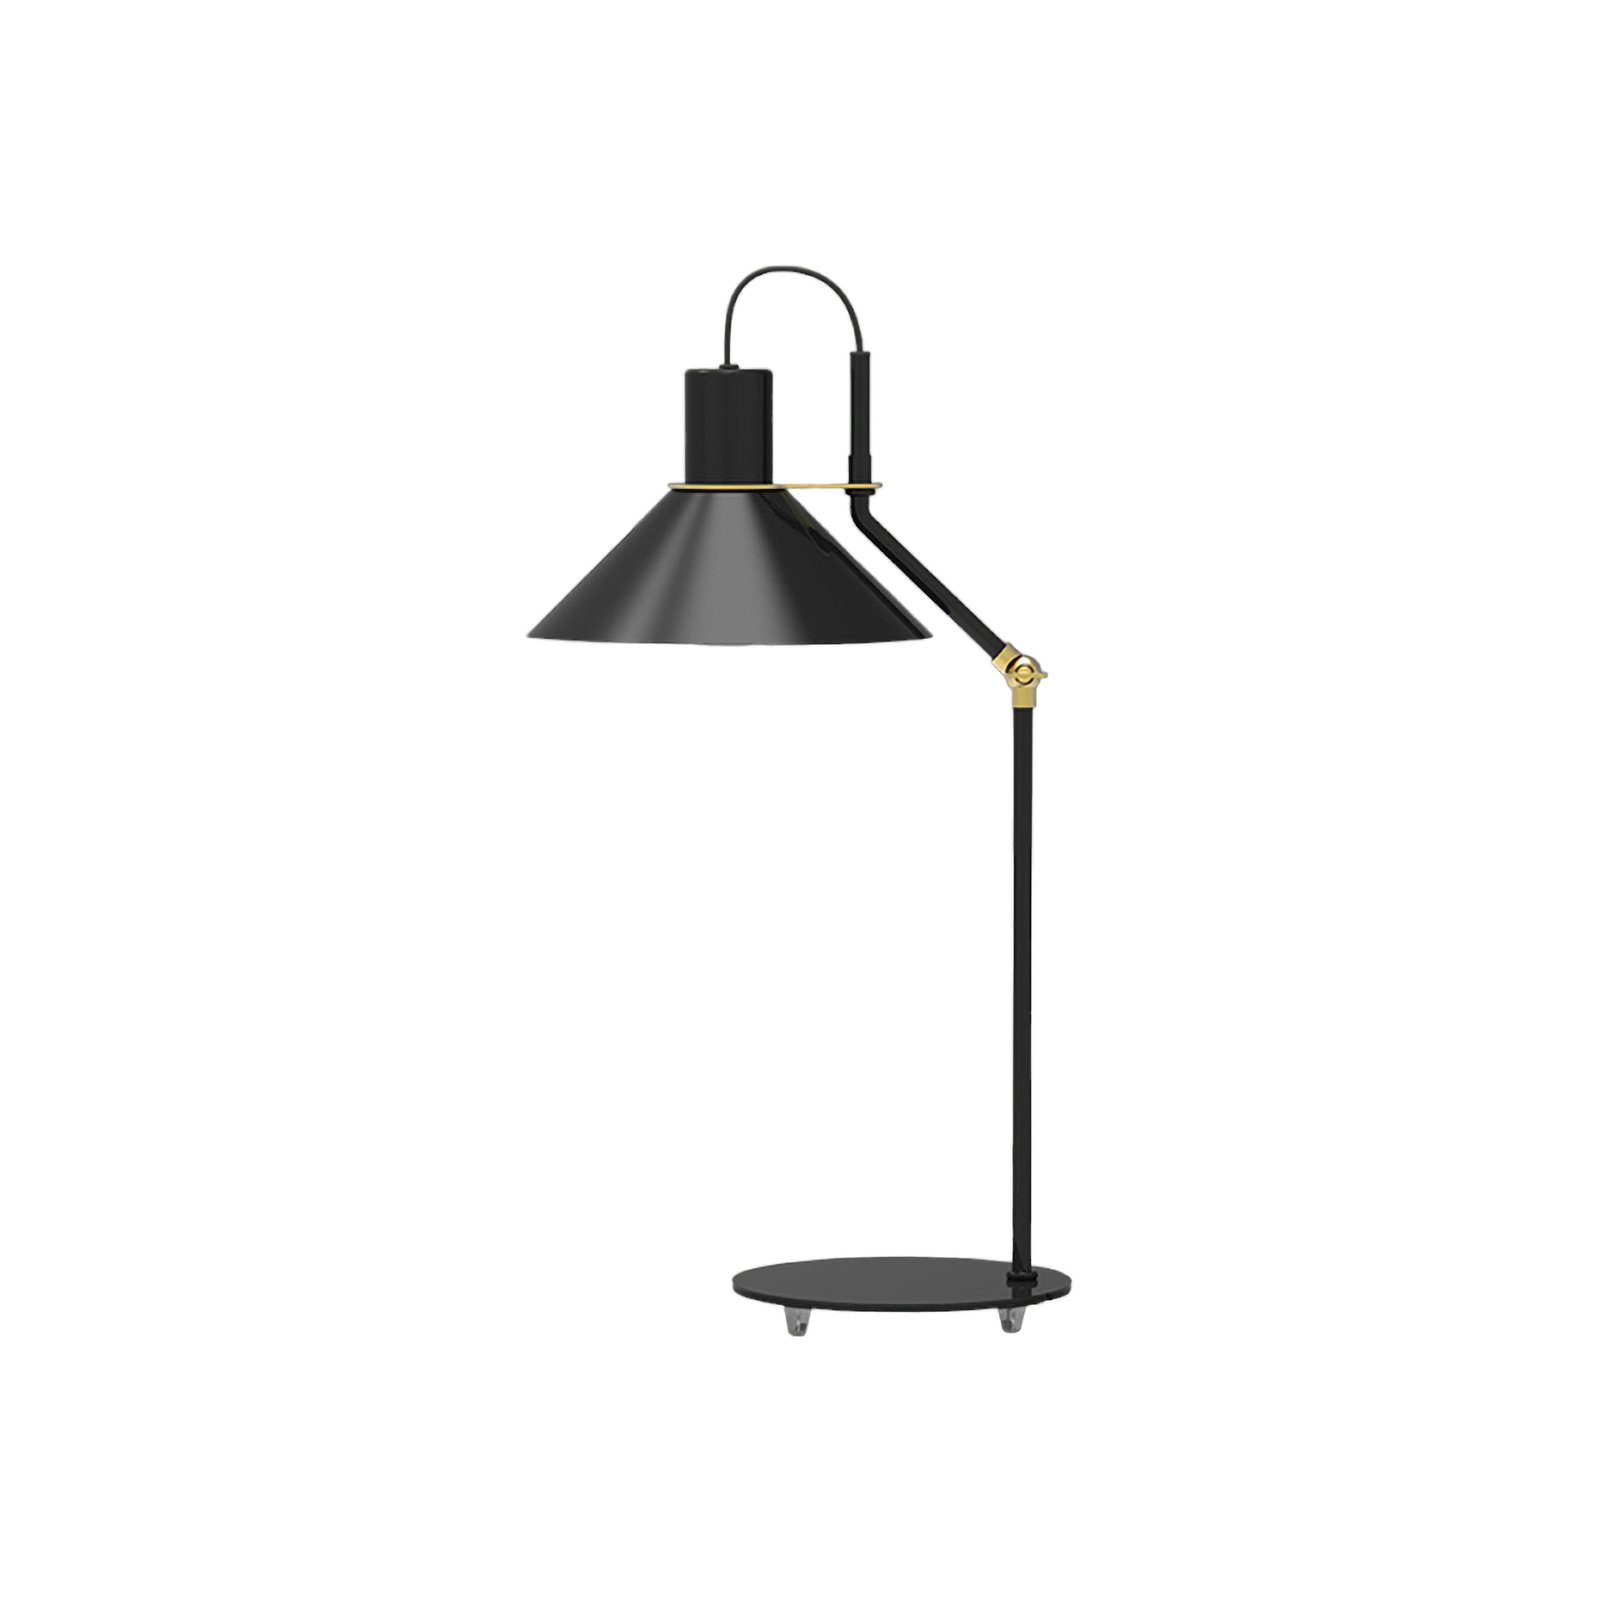 Aluminor Zinga table lamp, black, brass detail